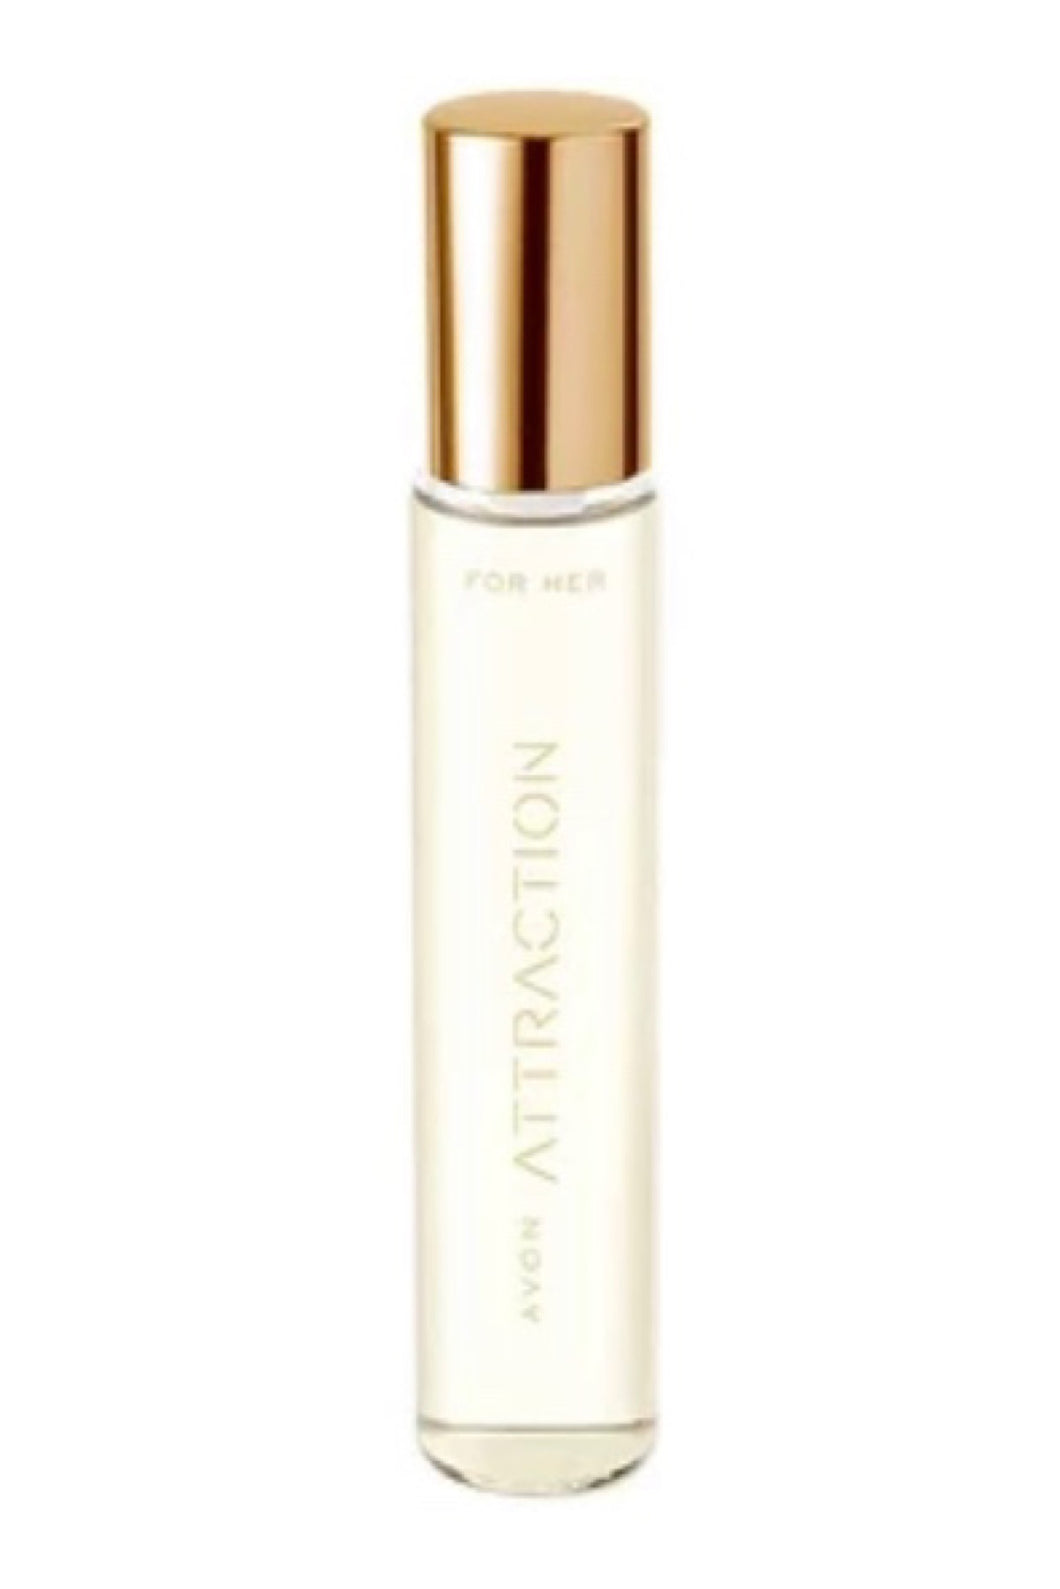 Avon Attraction for Her Eau de Parfum 10ml Purse Spray